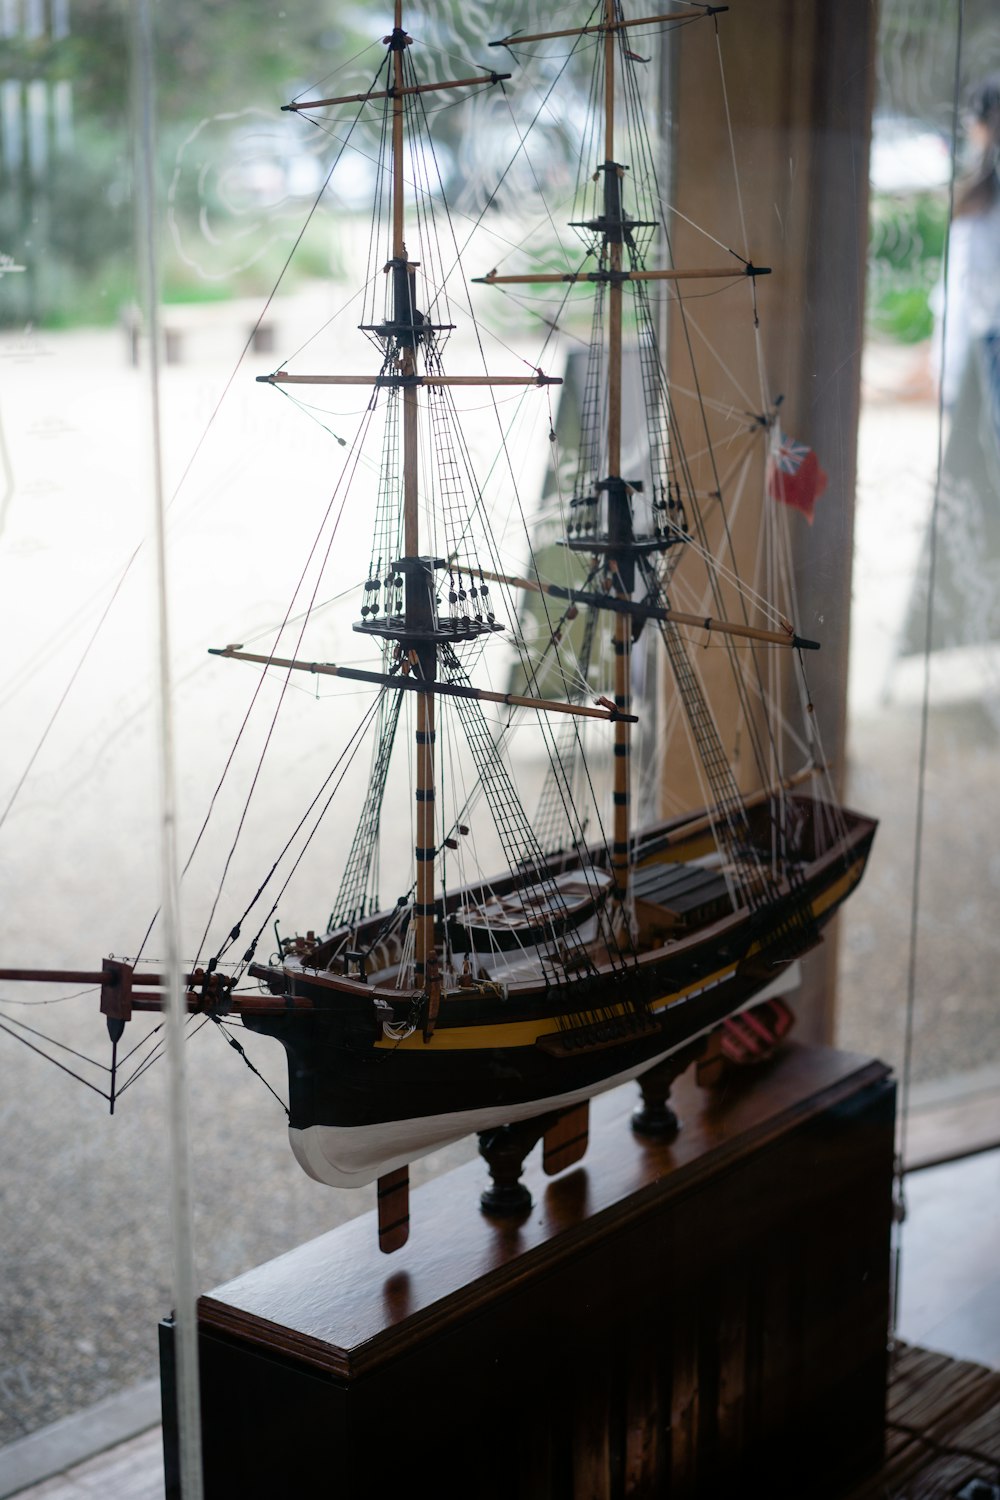 a model of a ship